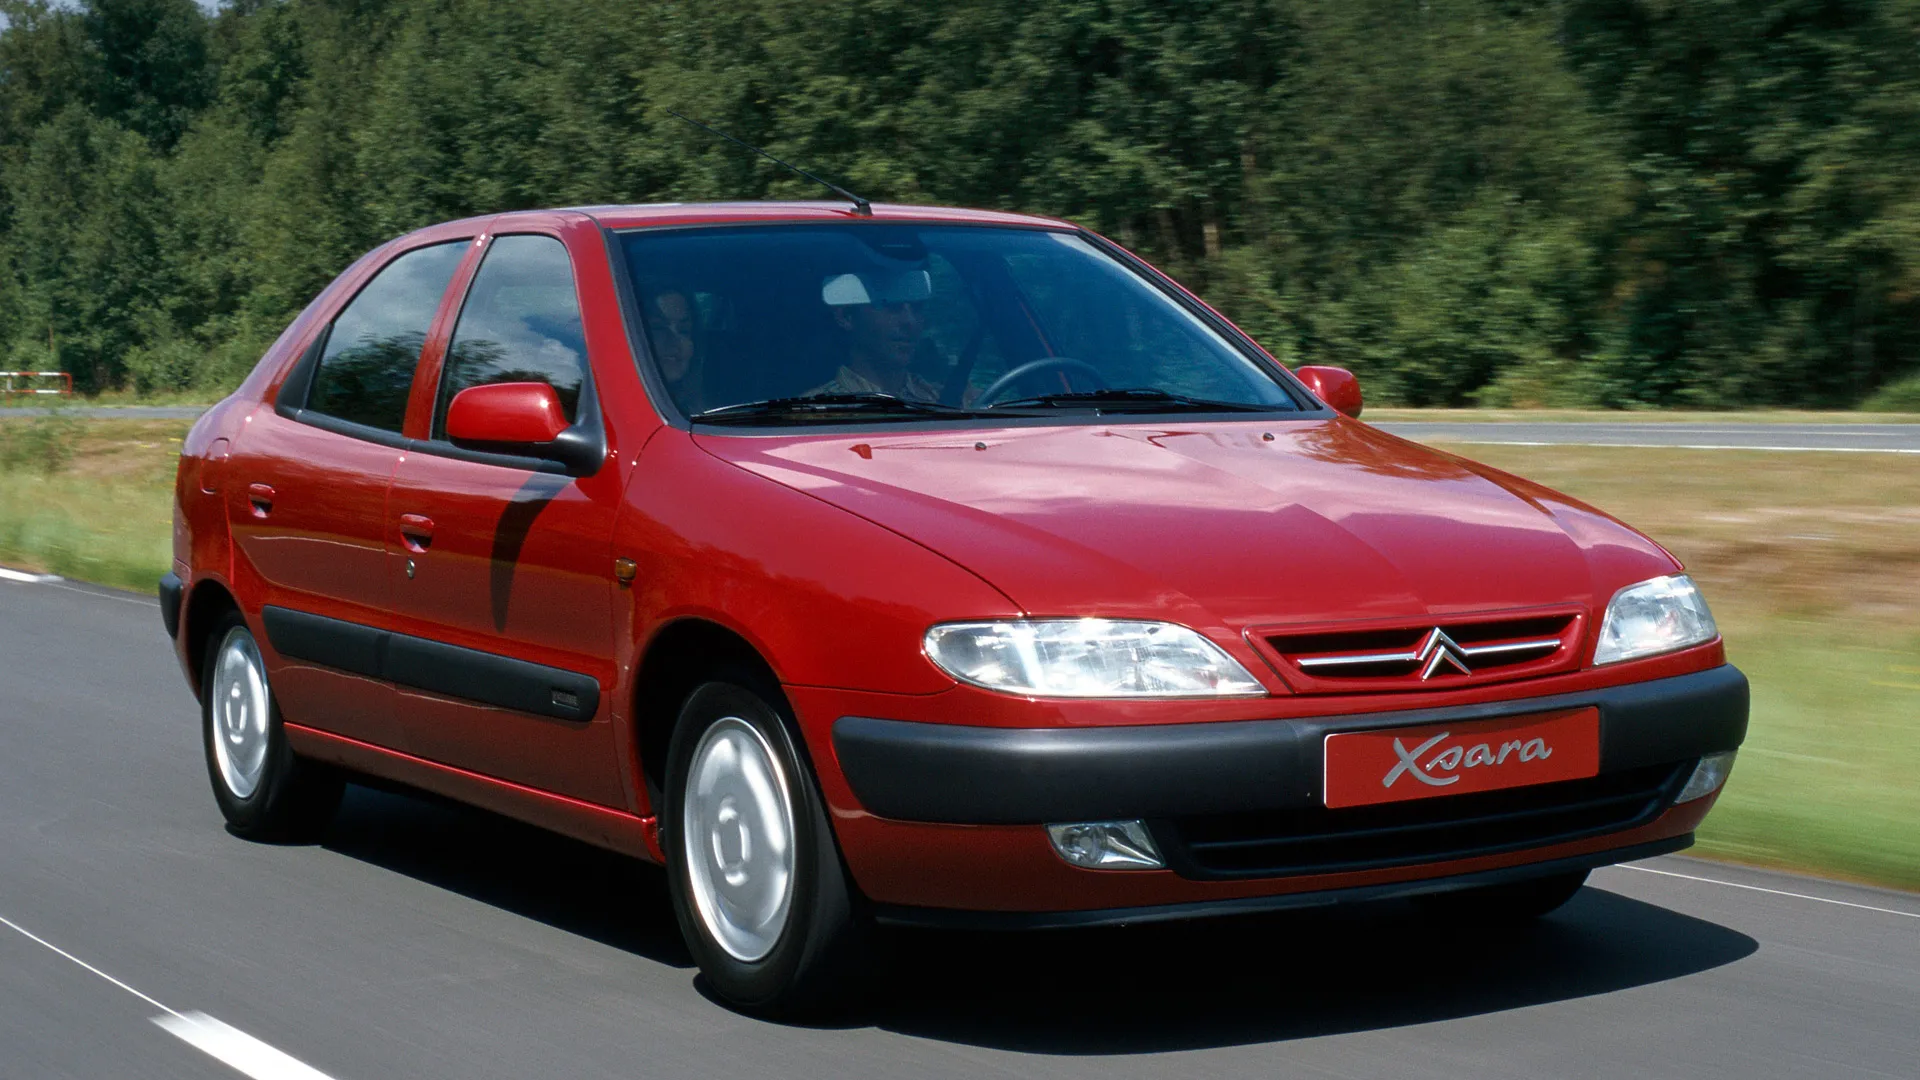 Coche del día: Citroën Xsara HDi (AMO I)